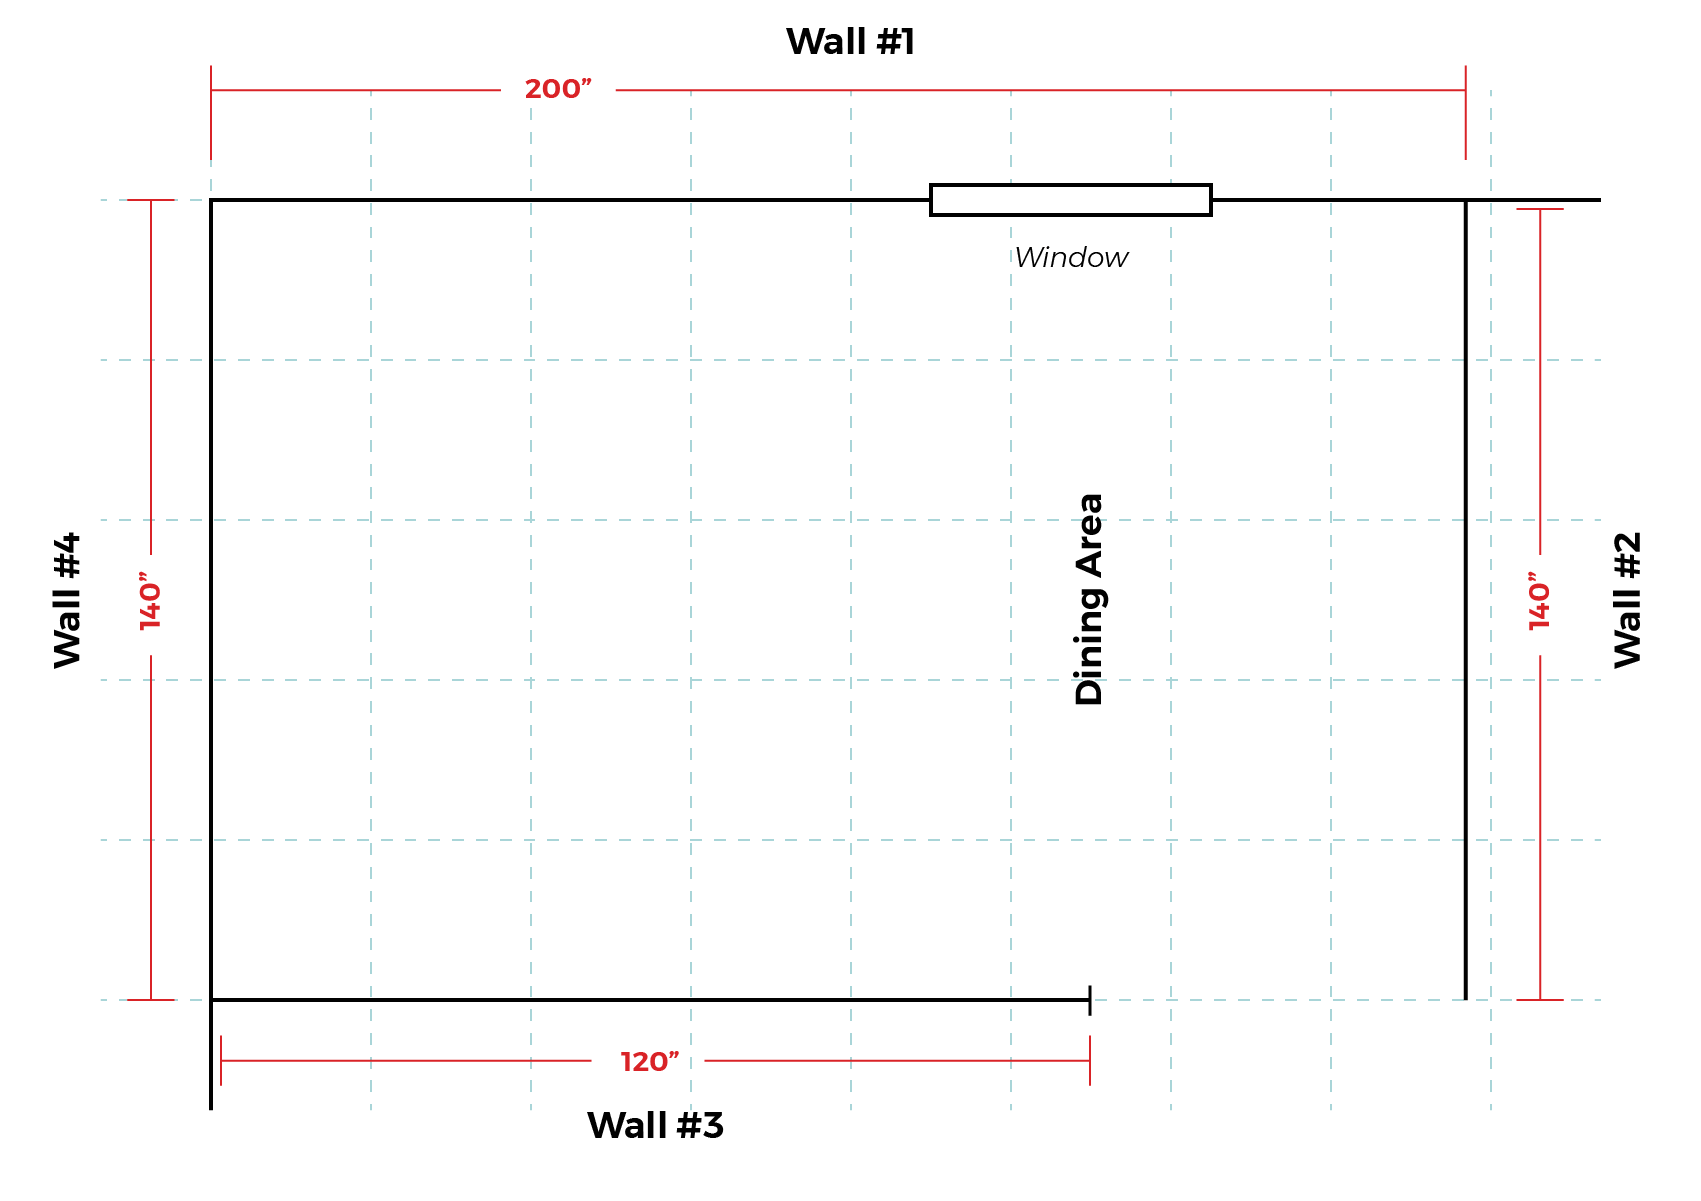 Horizontal wall measurement example.